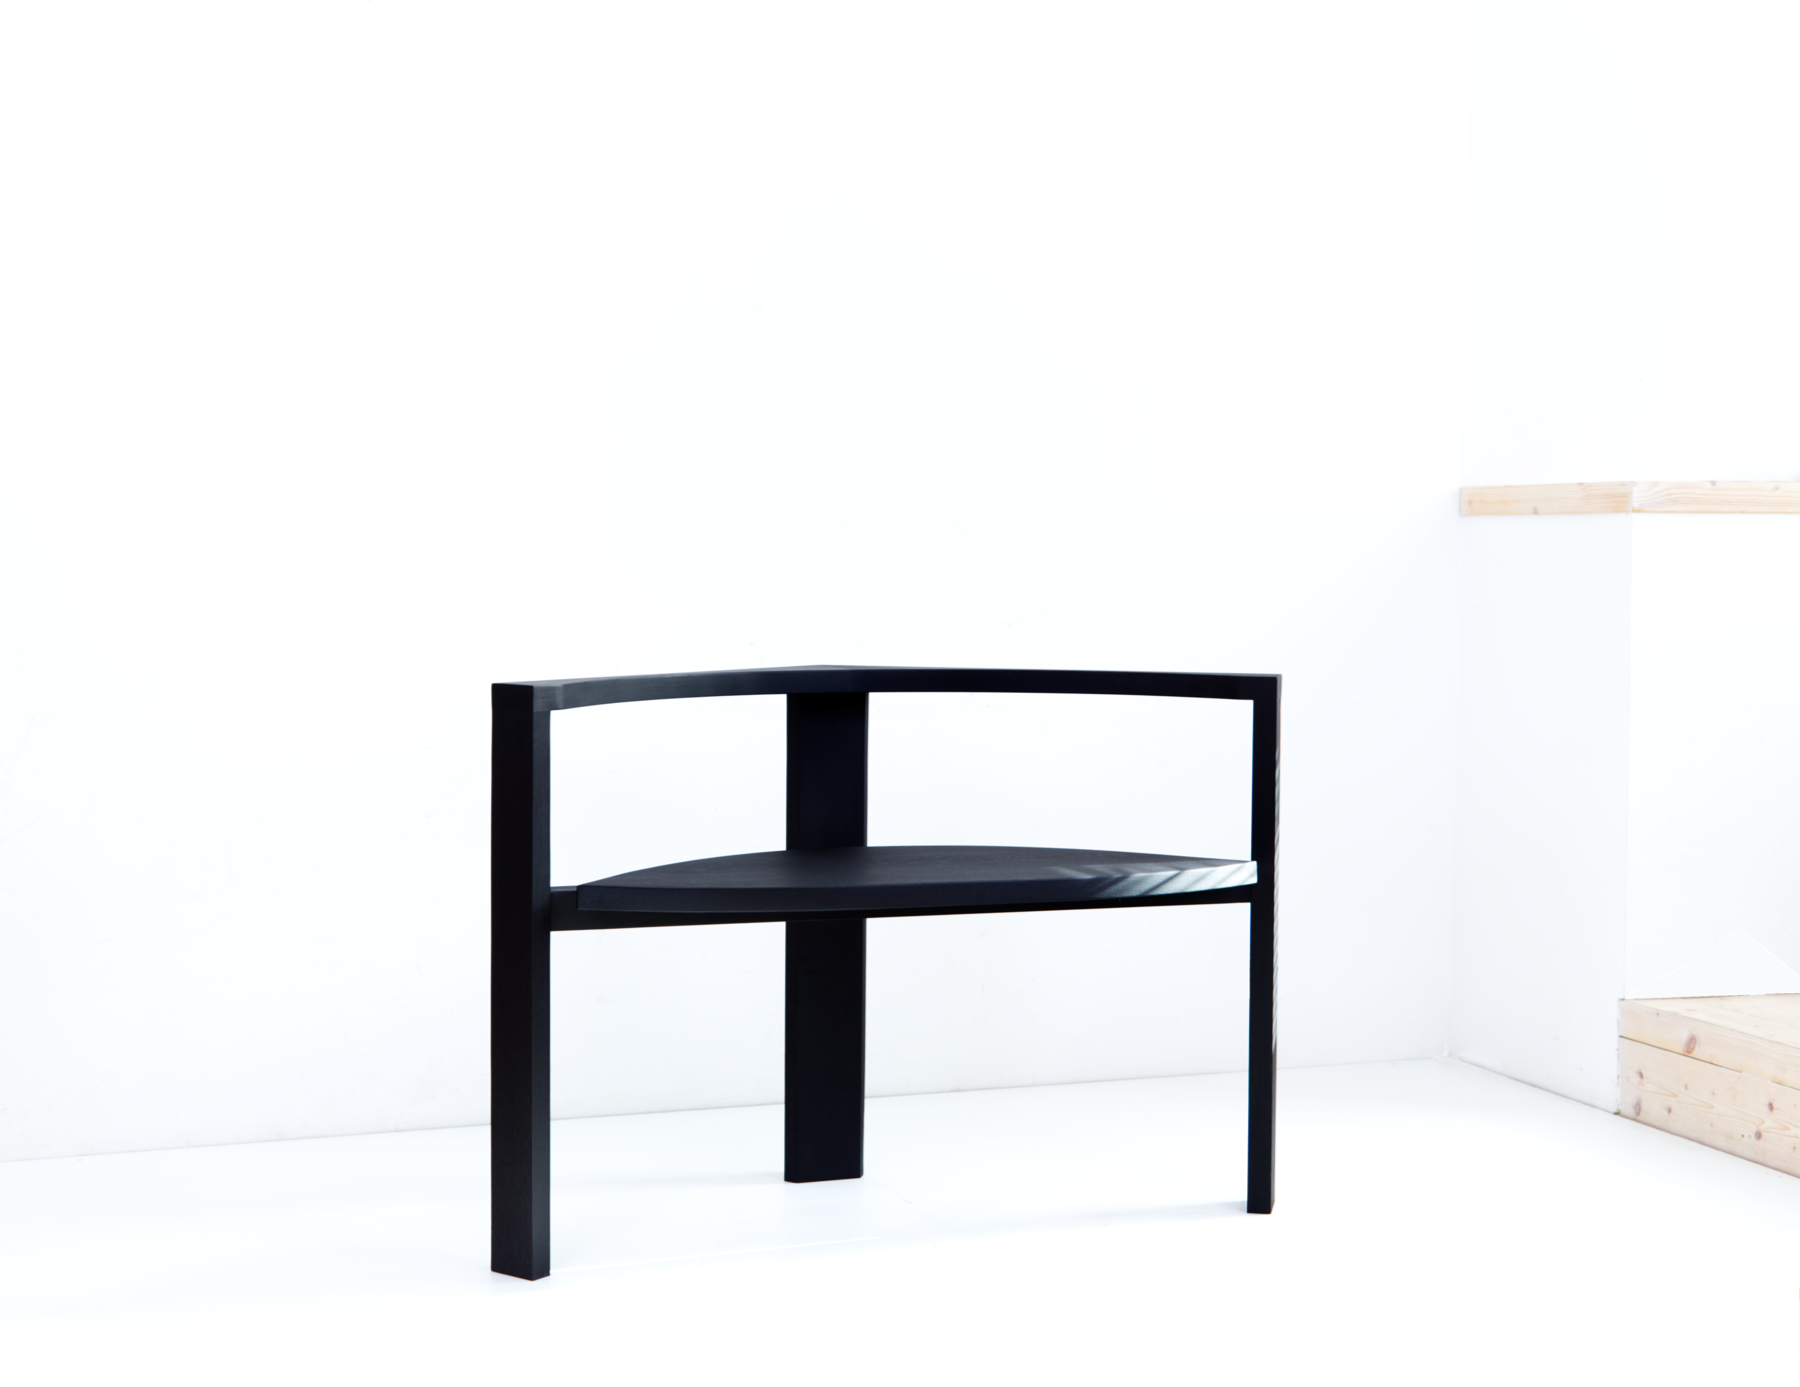 Collectible design, Furnituredesign, Interiordesign studio, Frankfurt am Main 